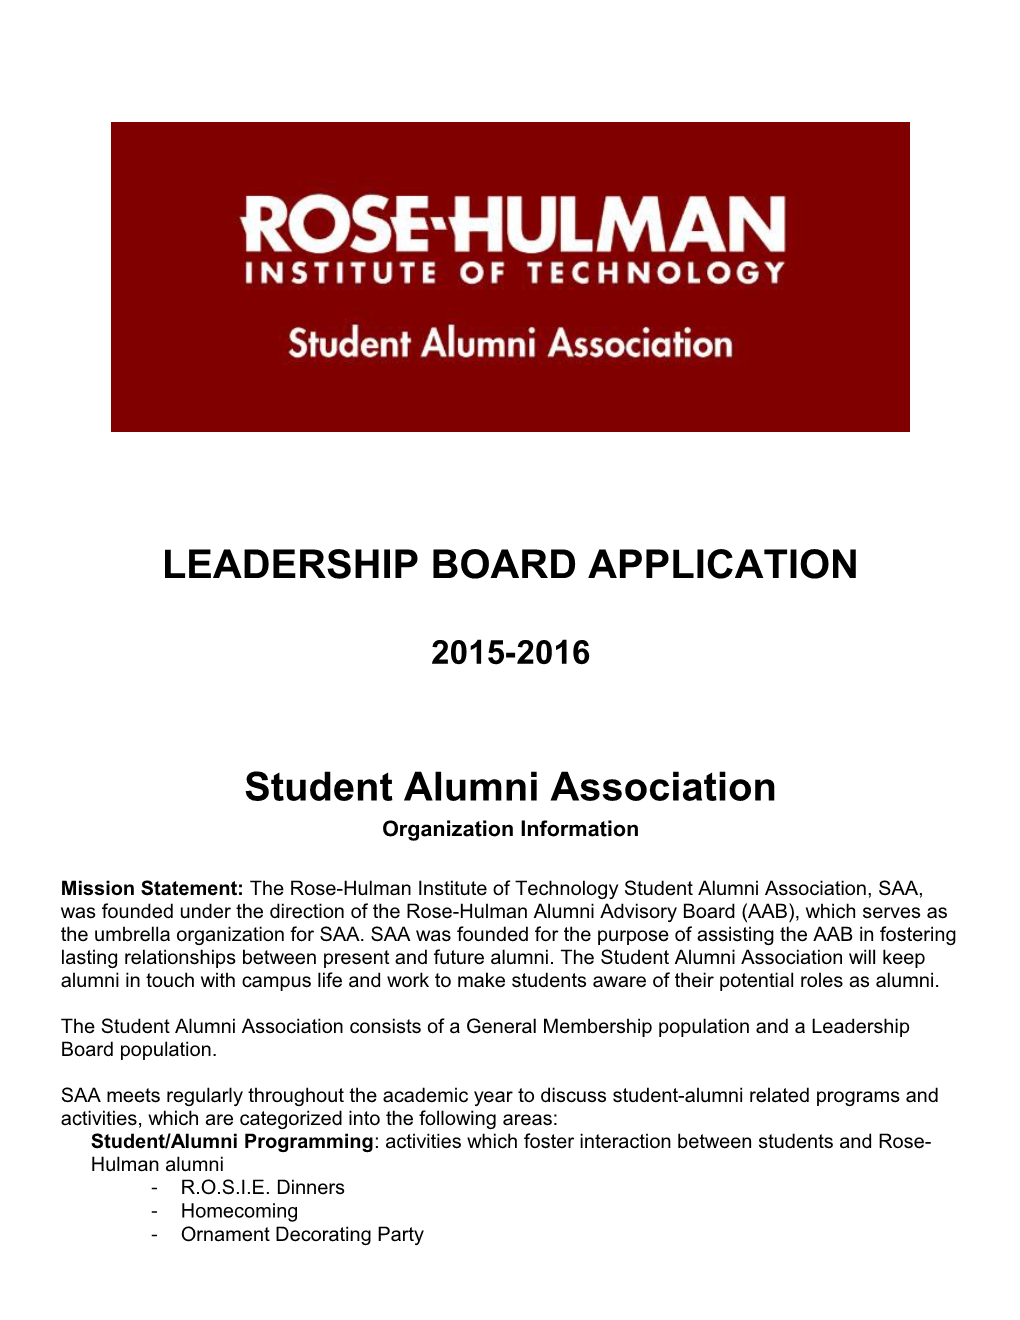 Leadership Board Application